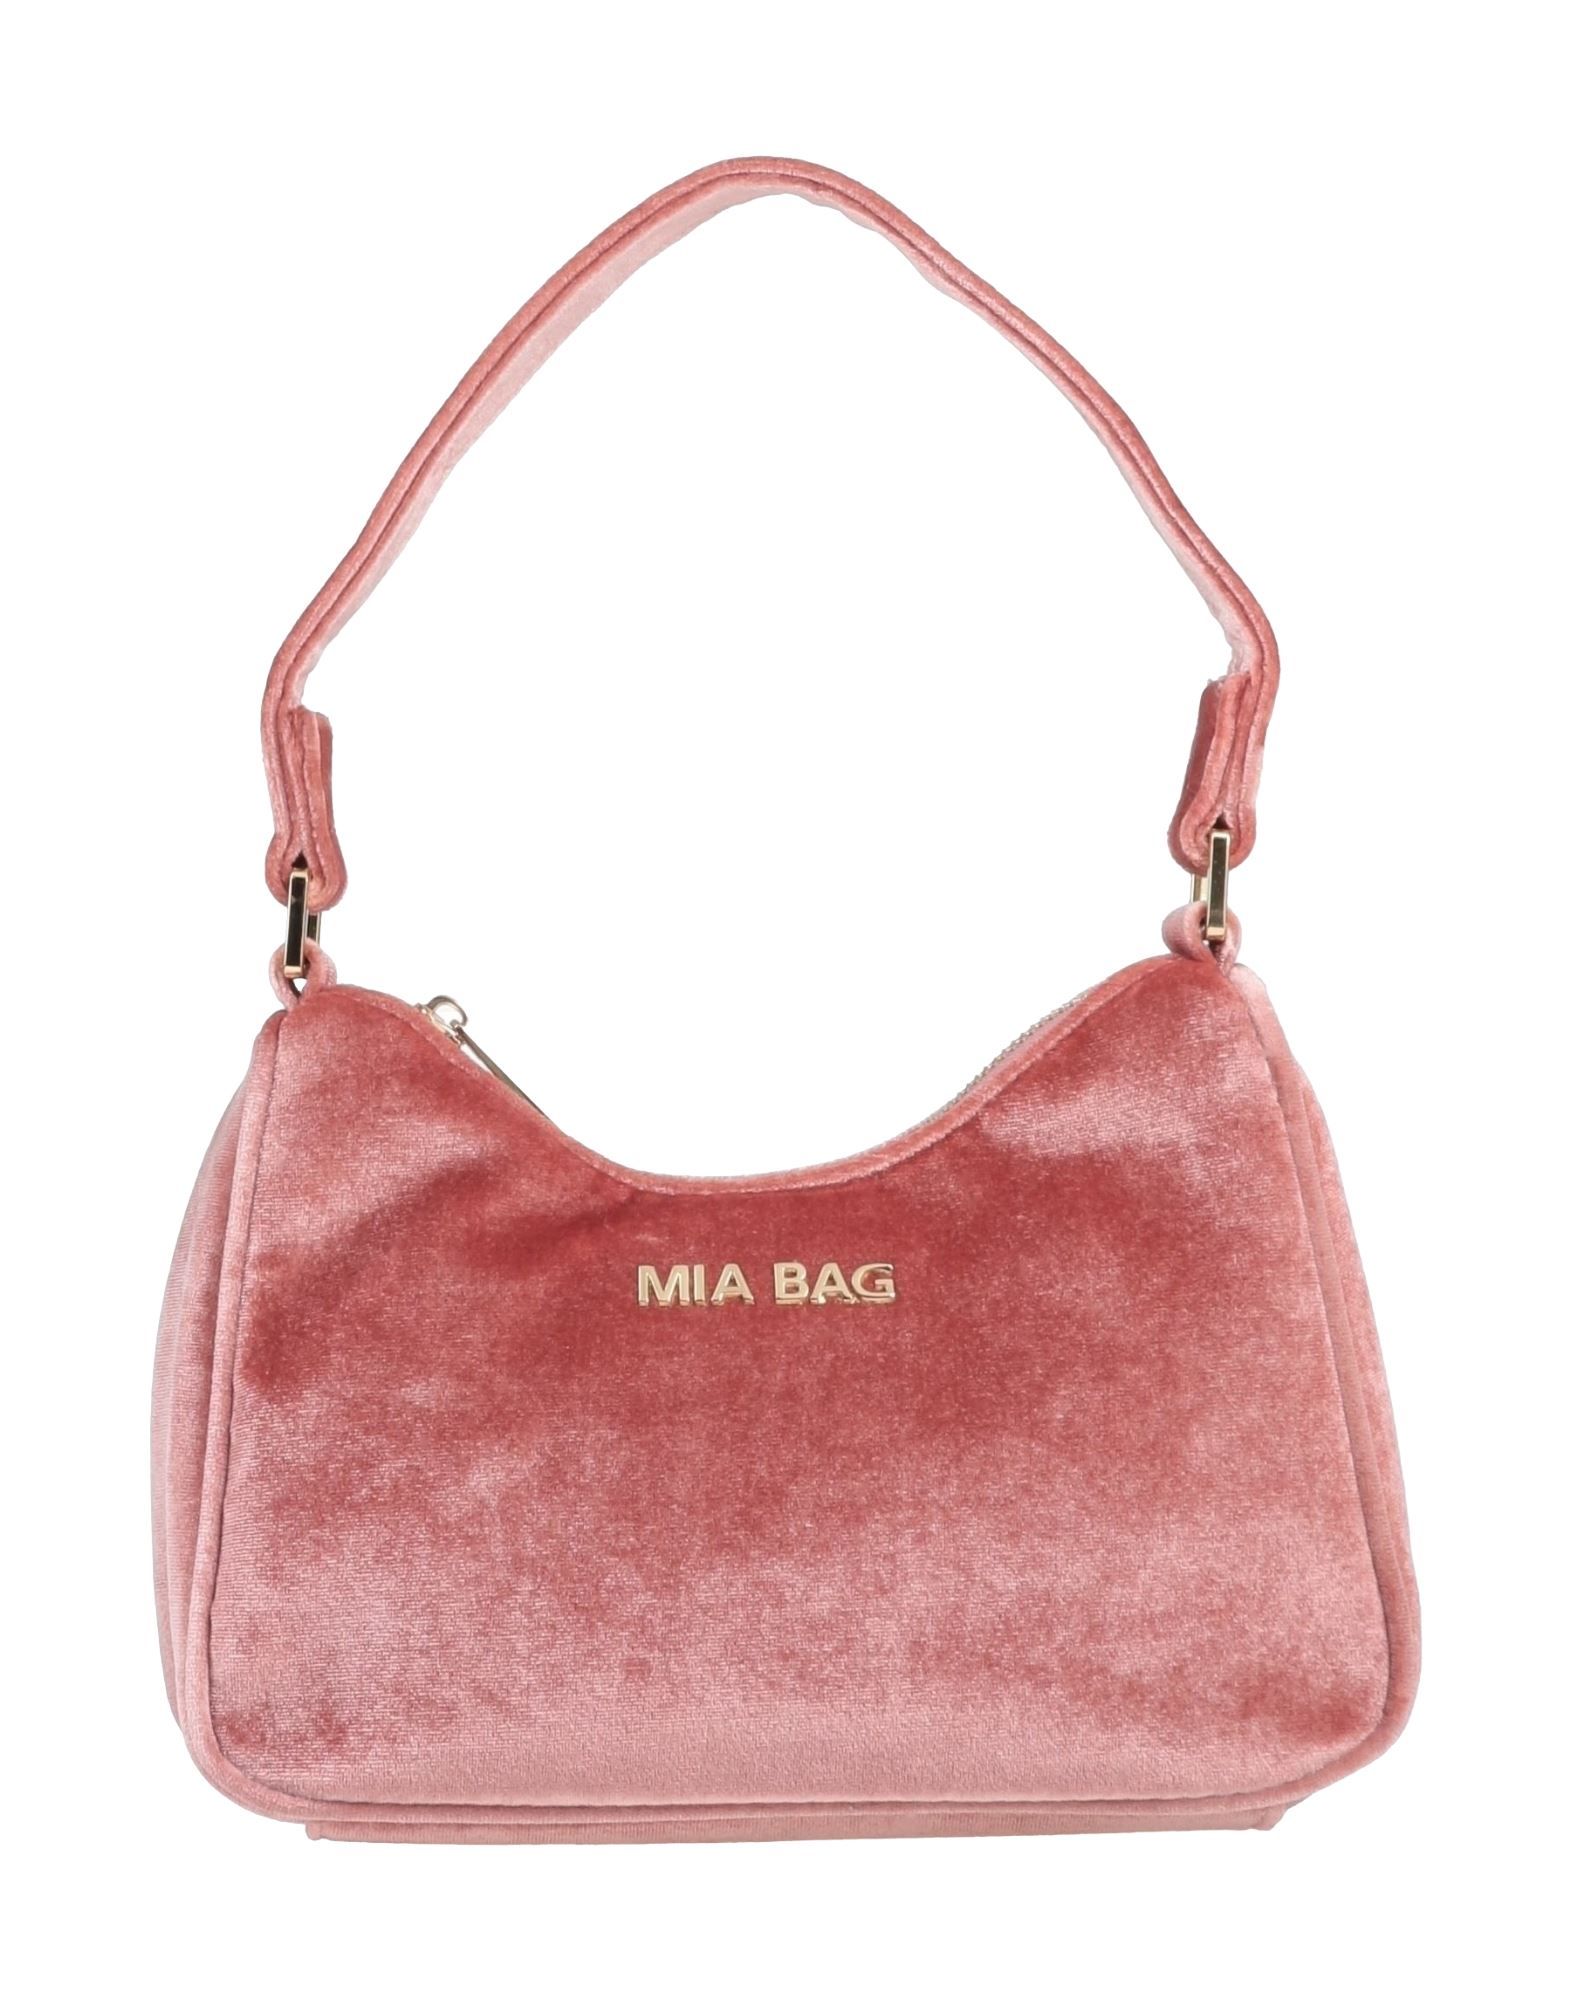 Mia Bag Handbags In Pastel Pink